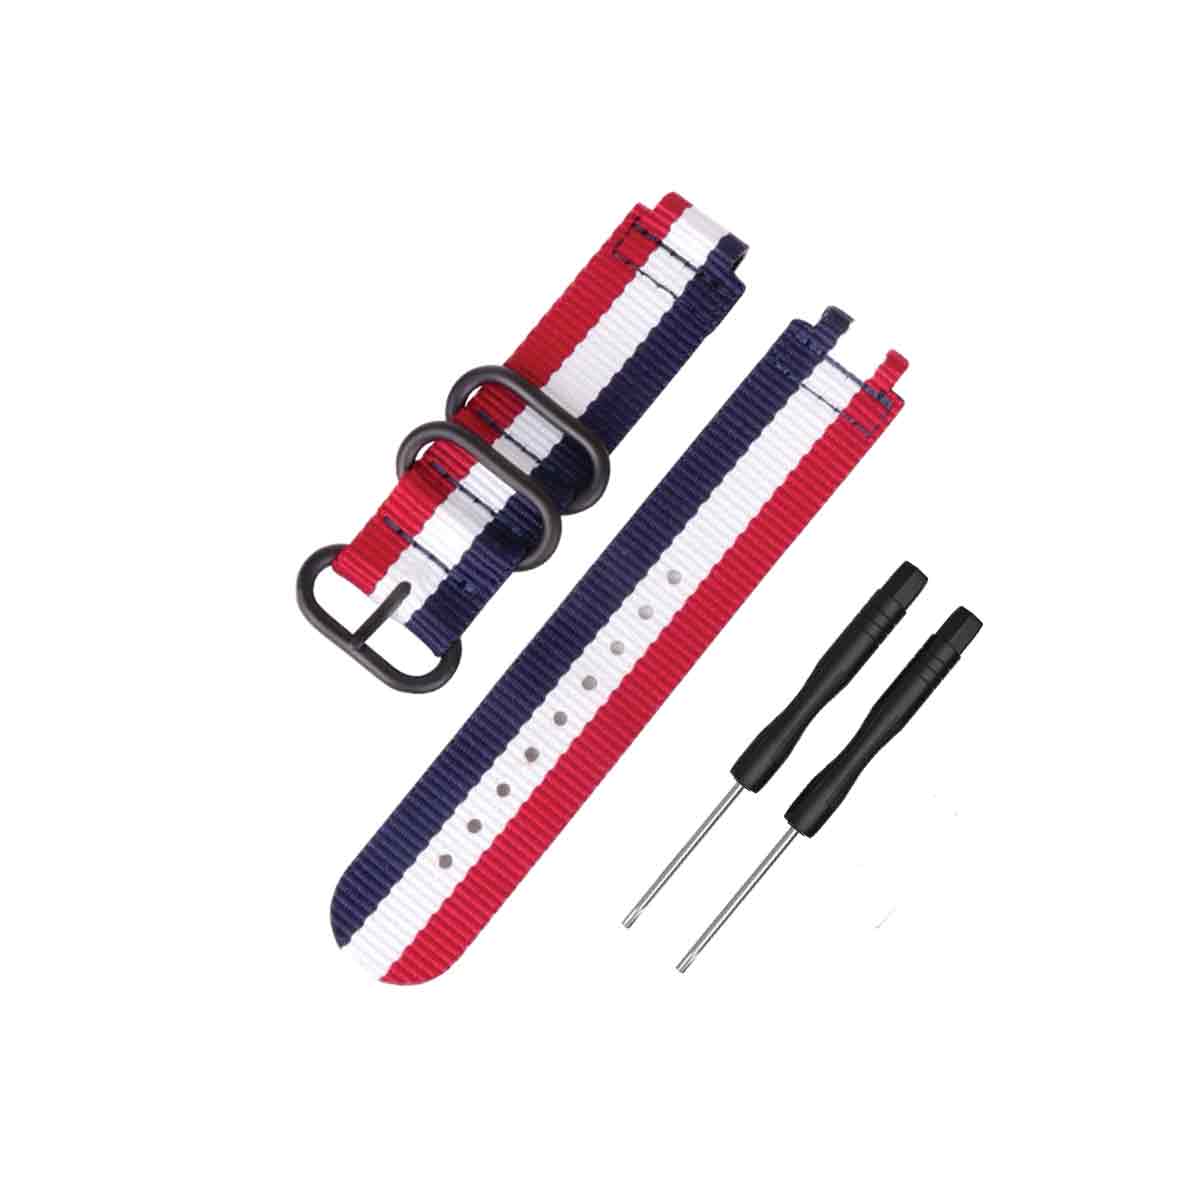 NATO Garmin Forerunner 230/235/630/220/620/735 Replacement Bands Blue + White + Red Stripe  